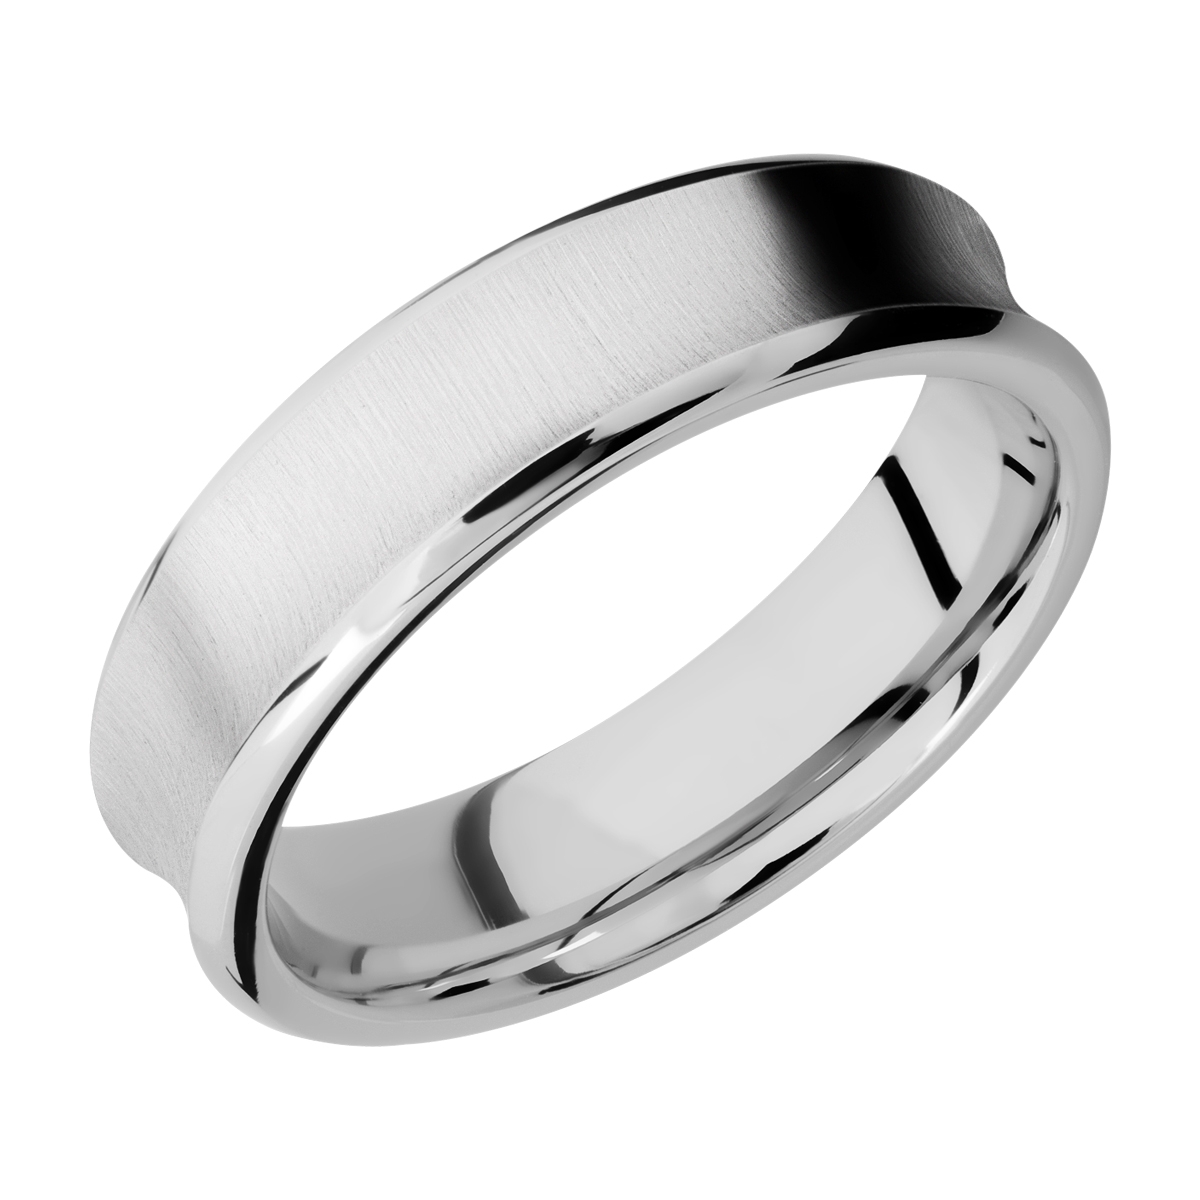 Lashbrook CC6CB Cobalt Chrome Wedding Ring or Band